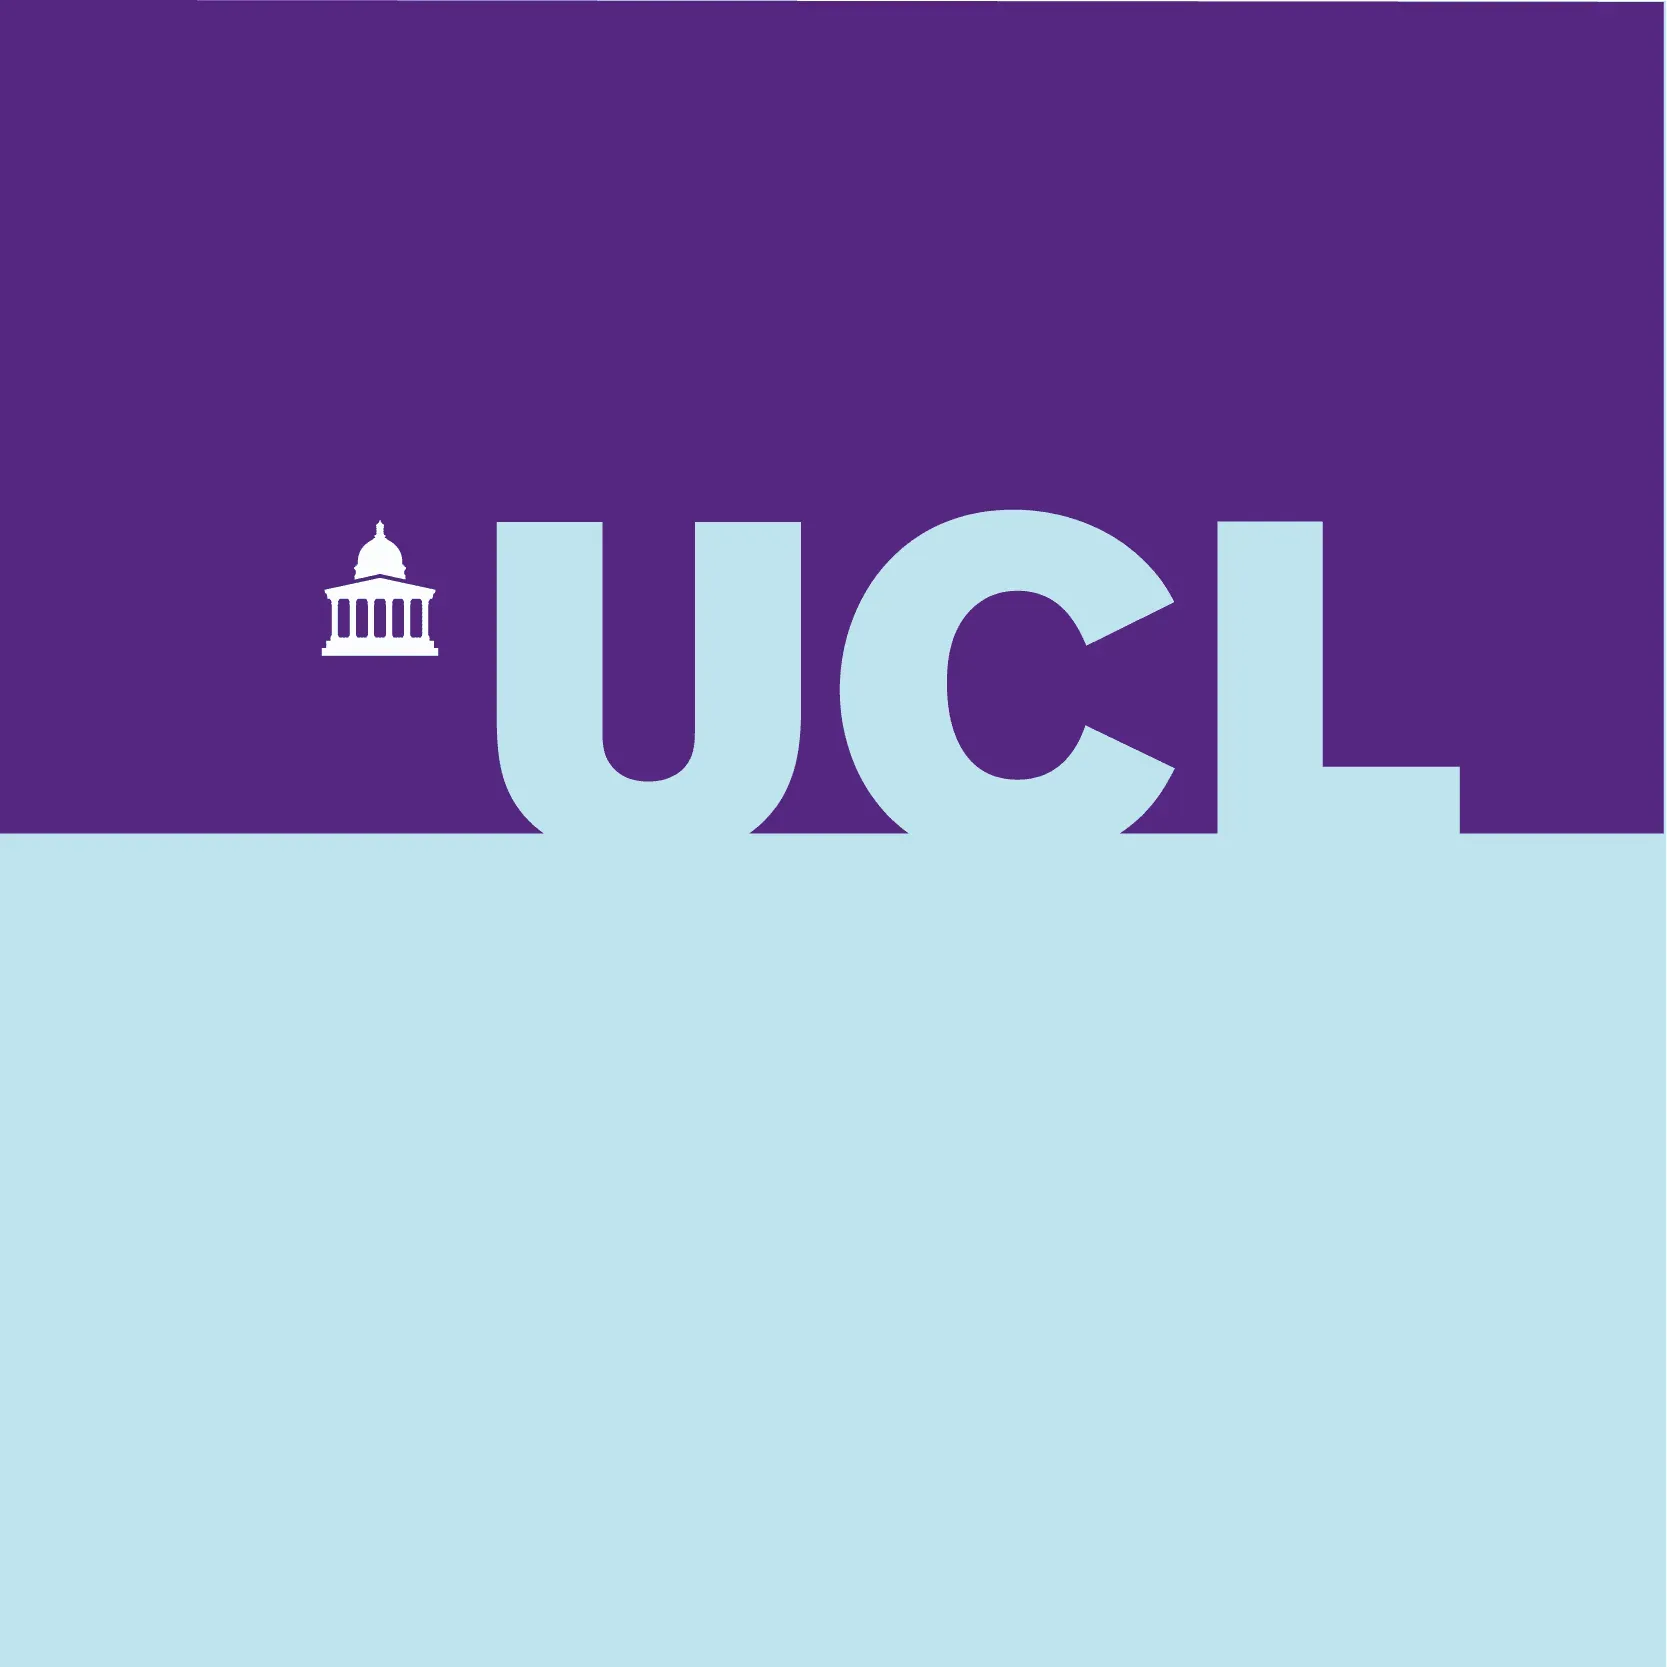 The University College London logo.